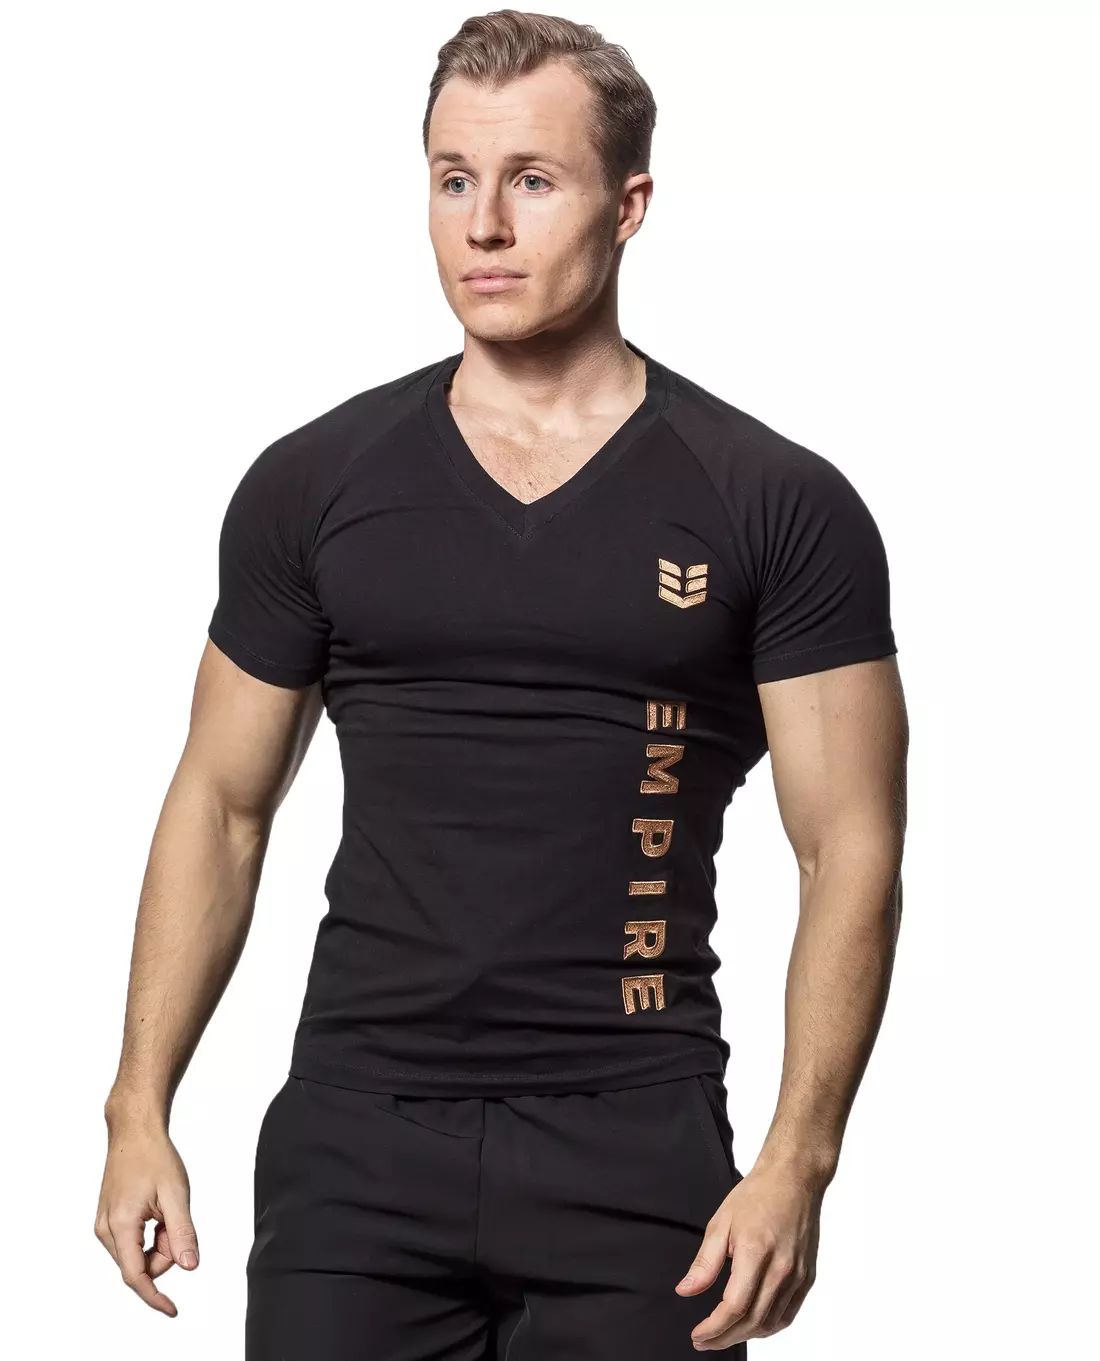 Adonis V-Neck T-Shirt Black Empire Embodied